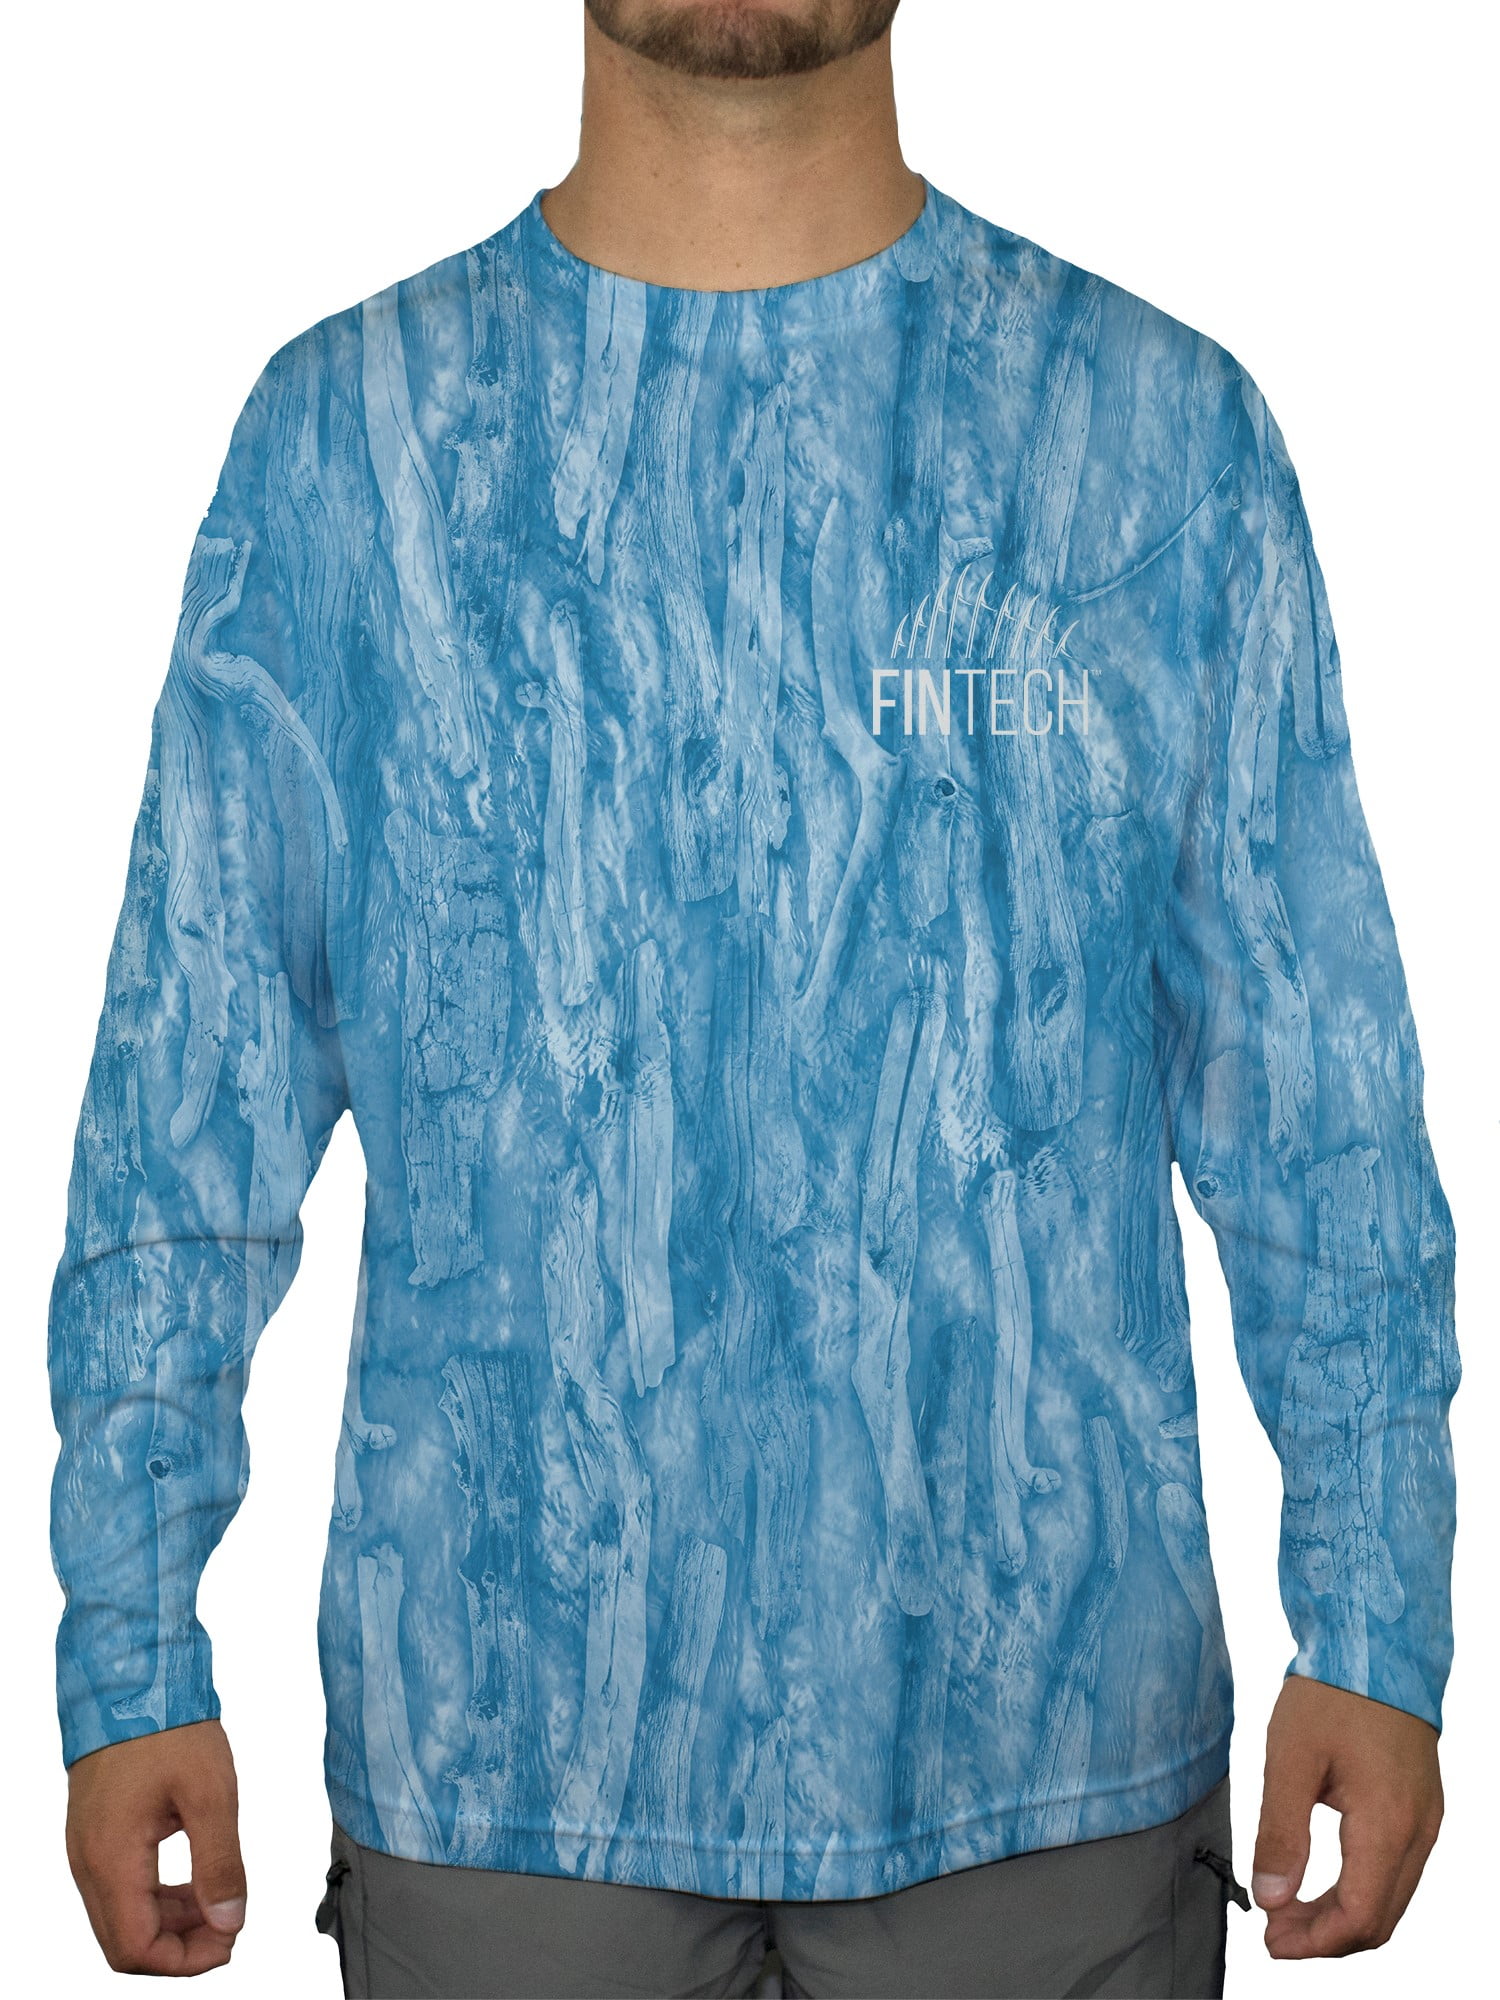 FINTech Fishing Shirt Mens XXL Gray Long Sleeve Performance Activewear Top